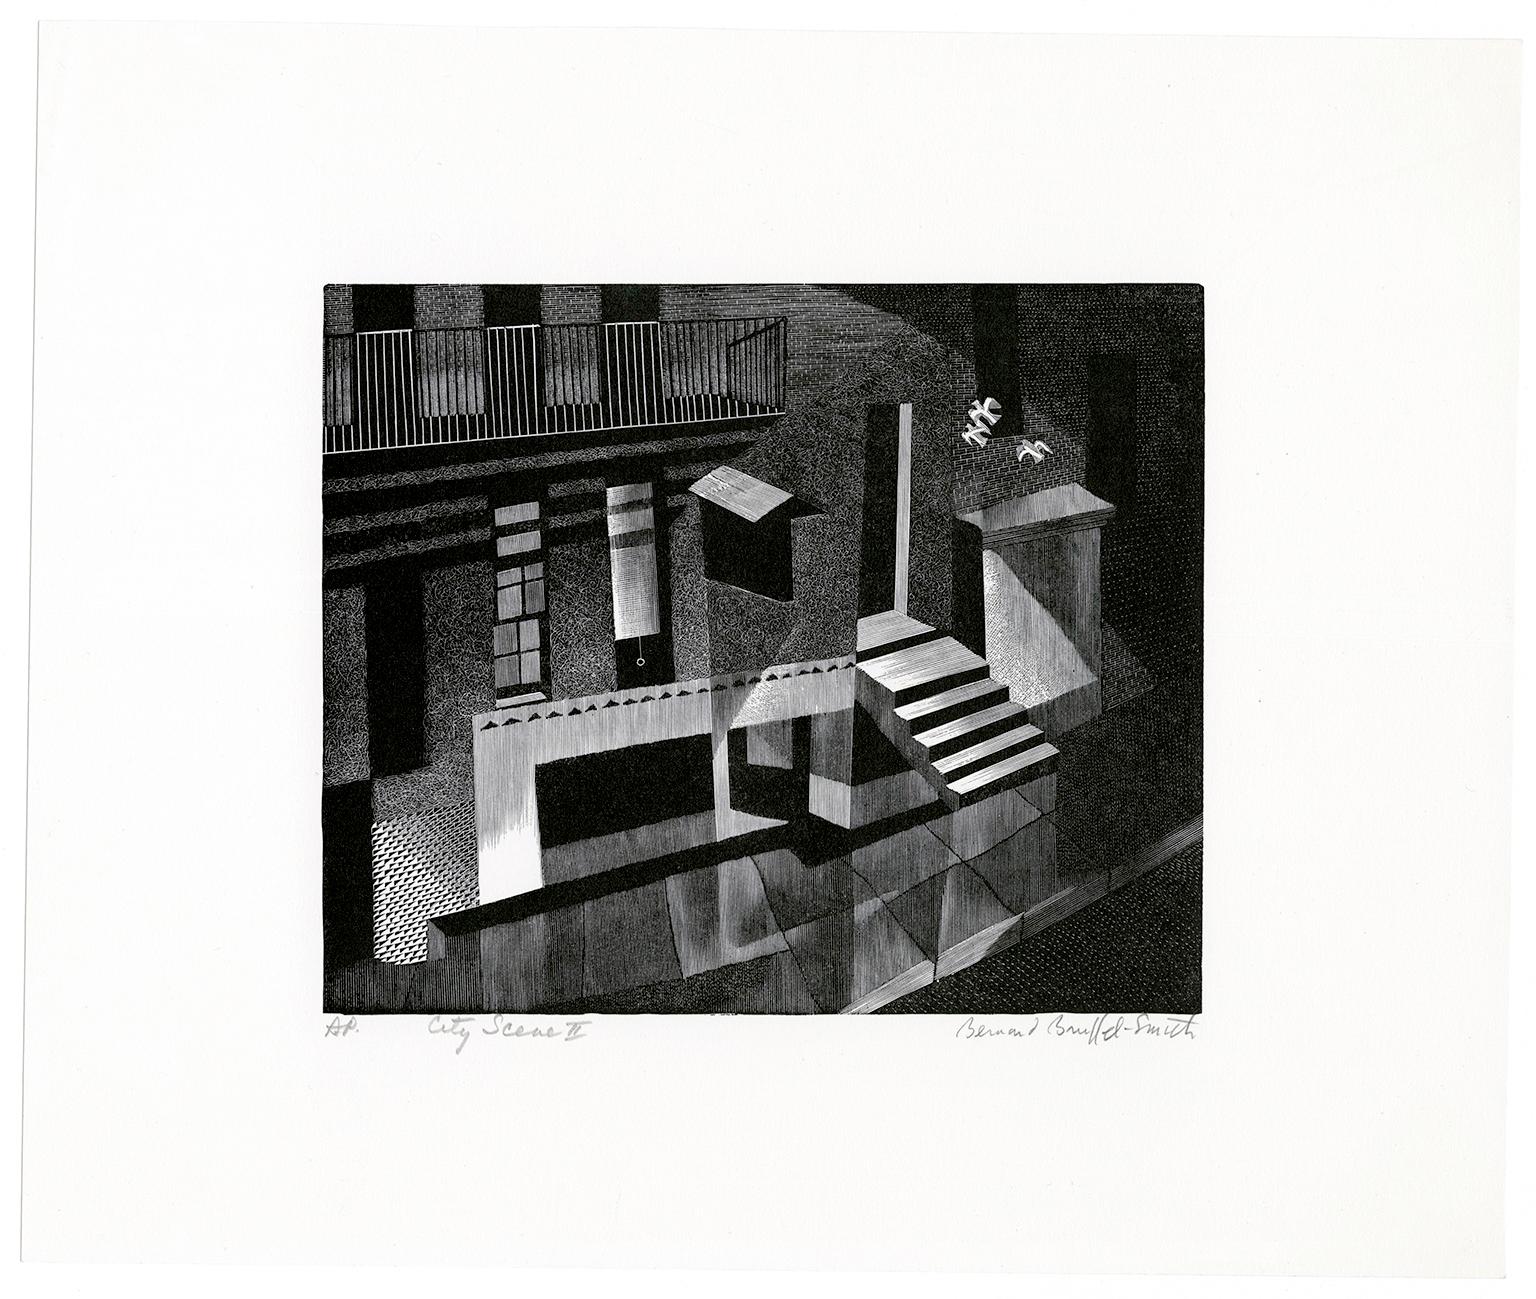 Scène de ville II   Moderne du milieu du siècle dernier - Print de Bernard Brussel-Smith